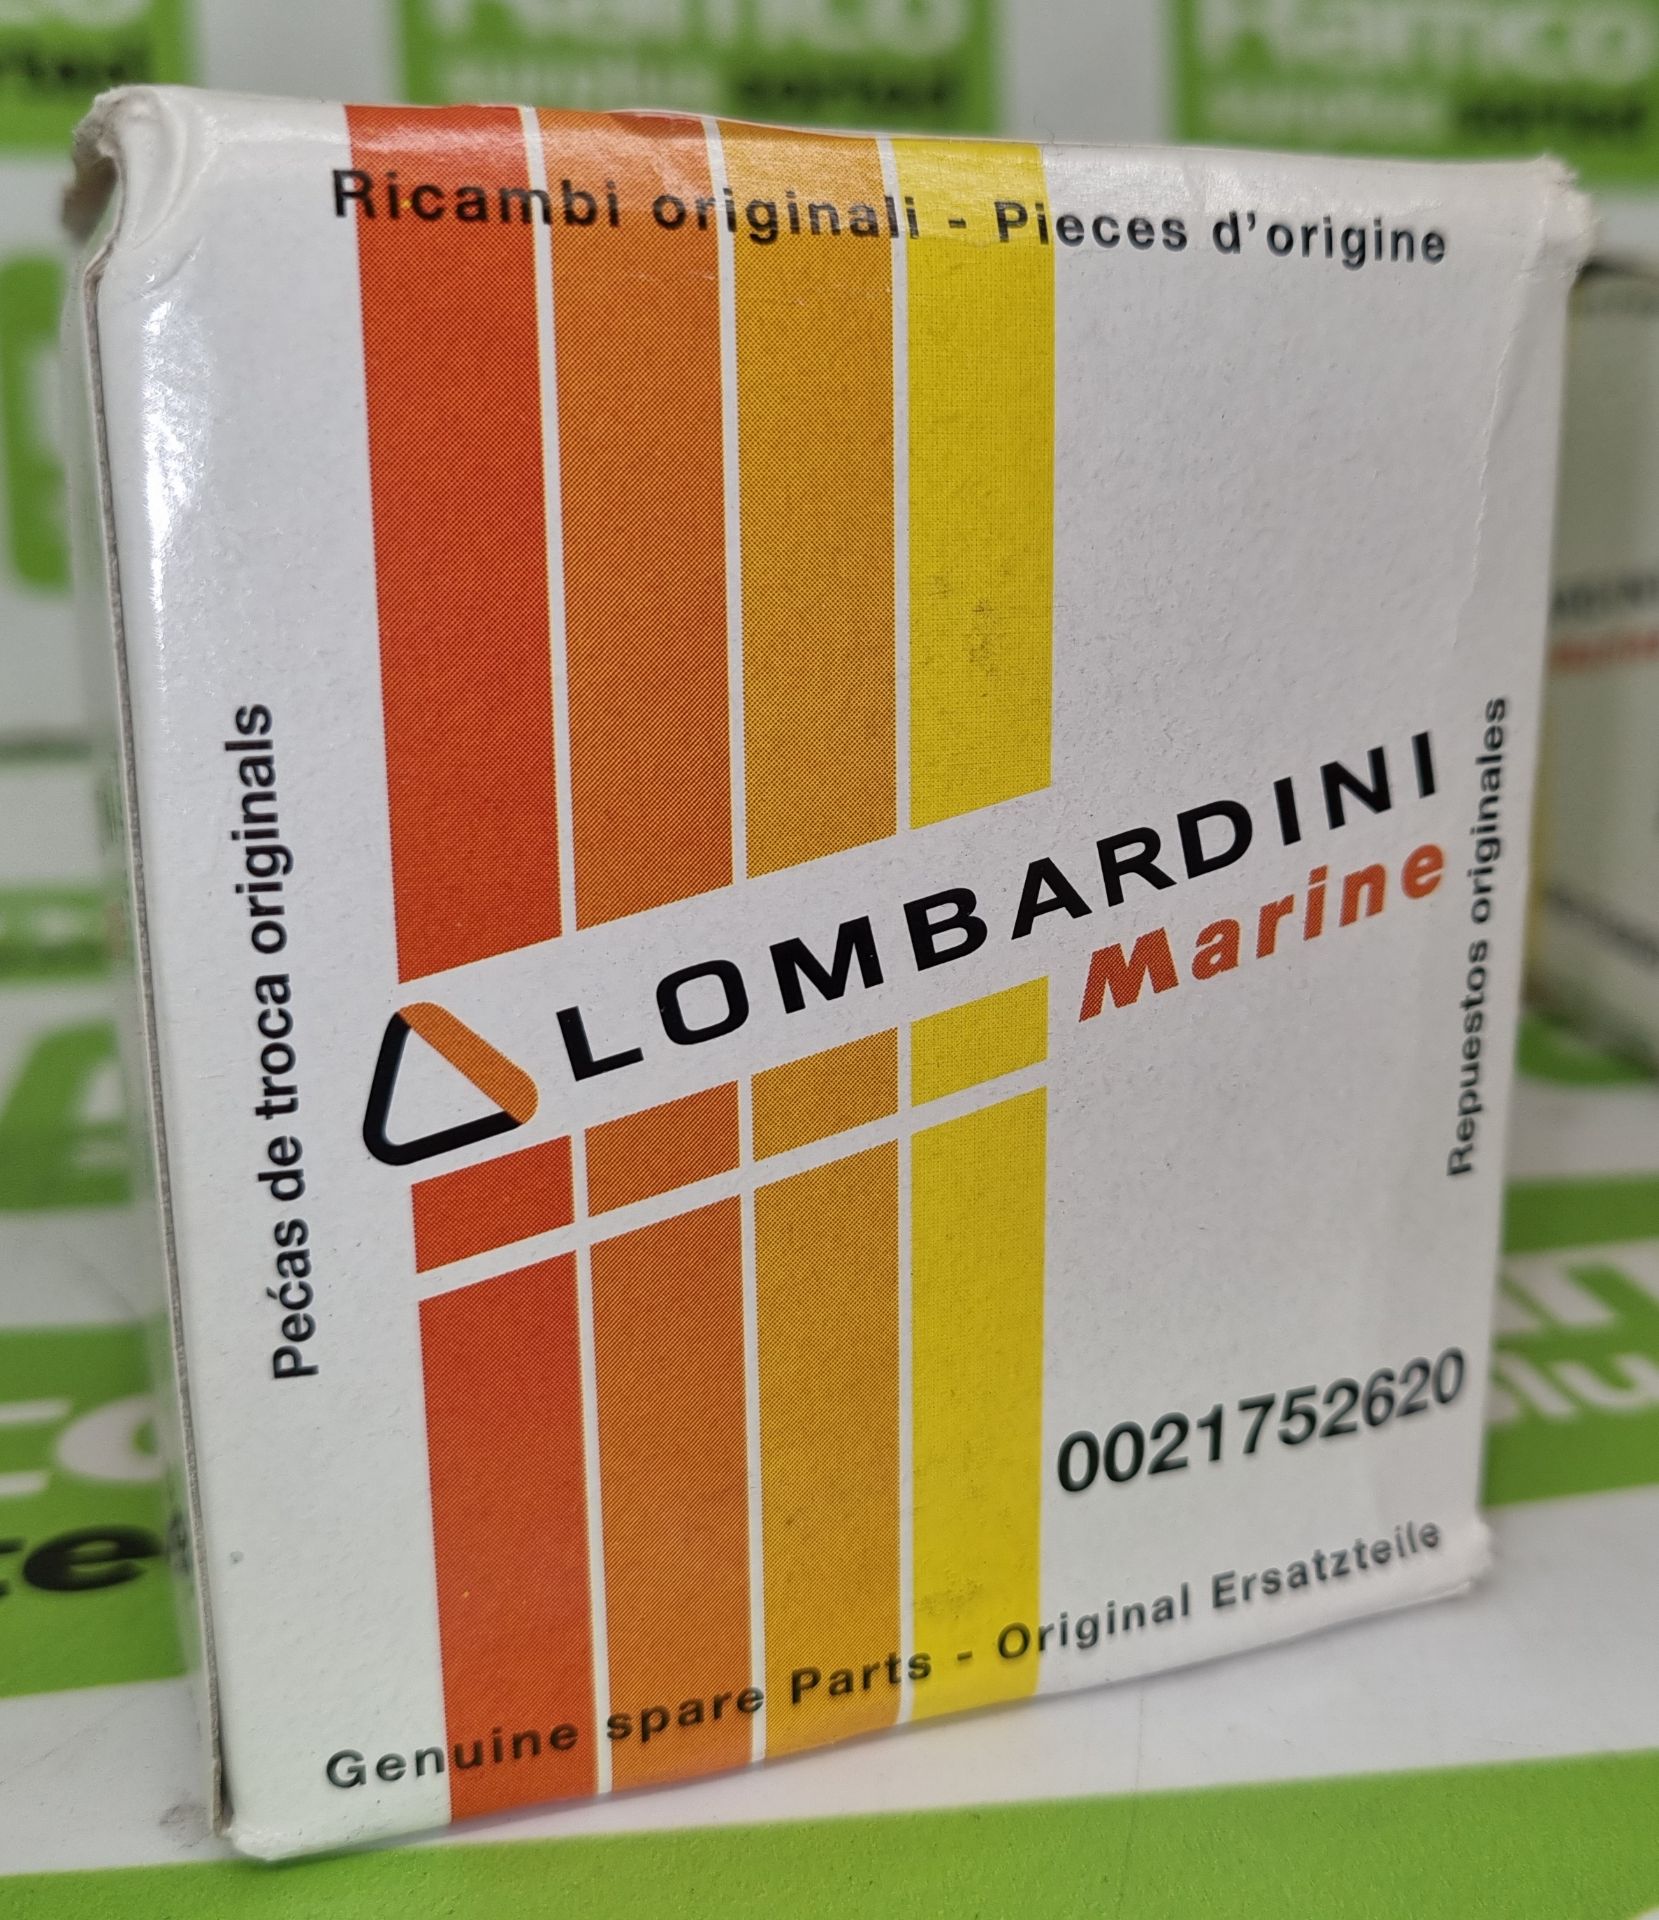 6x Lombardini marine 0021752620 oil filters - inner bore 20mm - Bild 3 aus 3